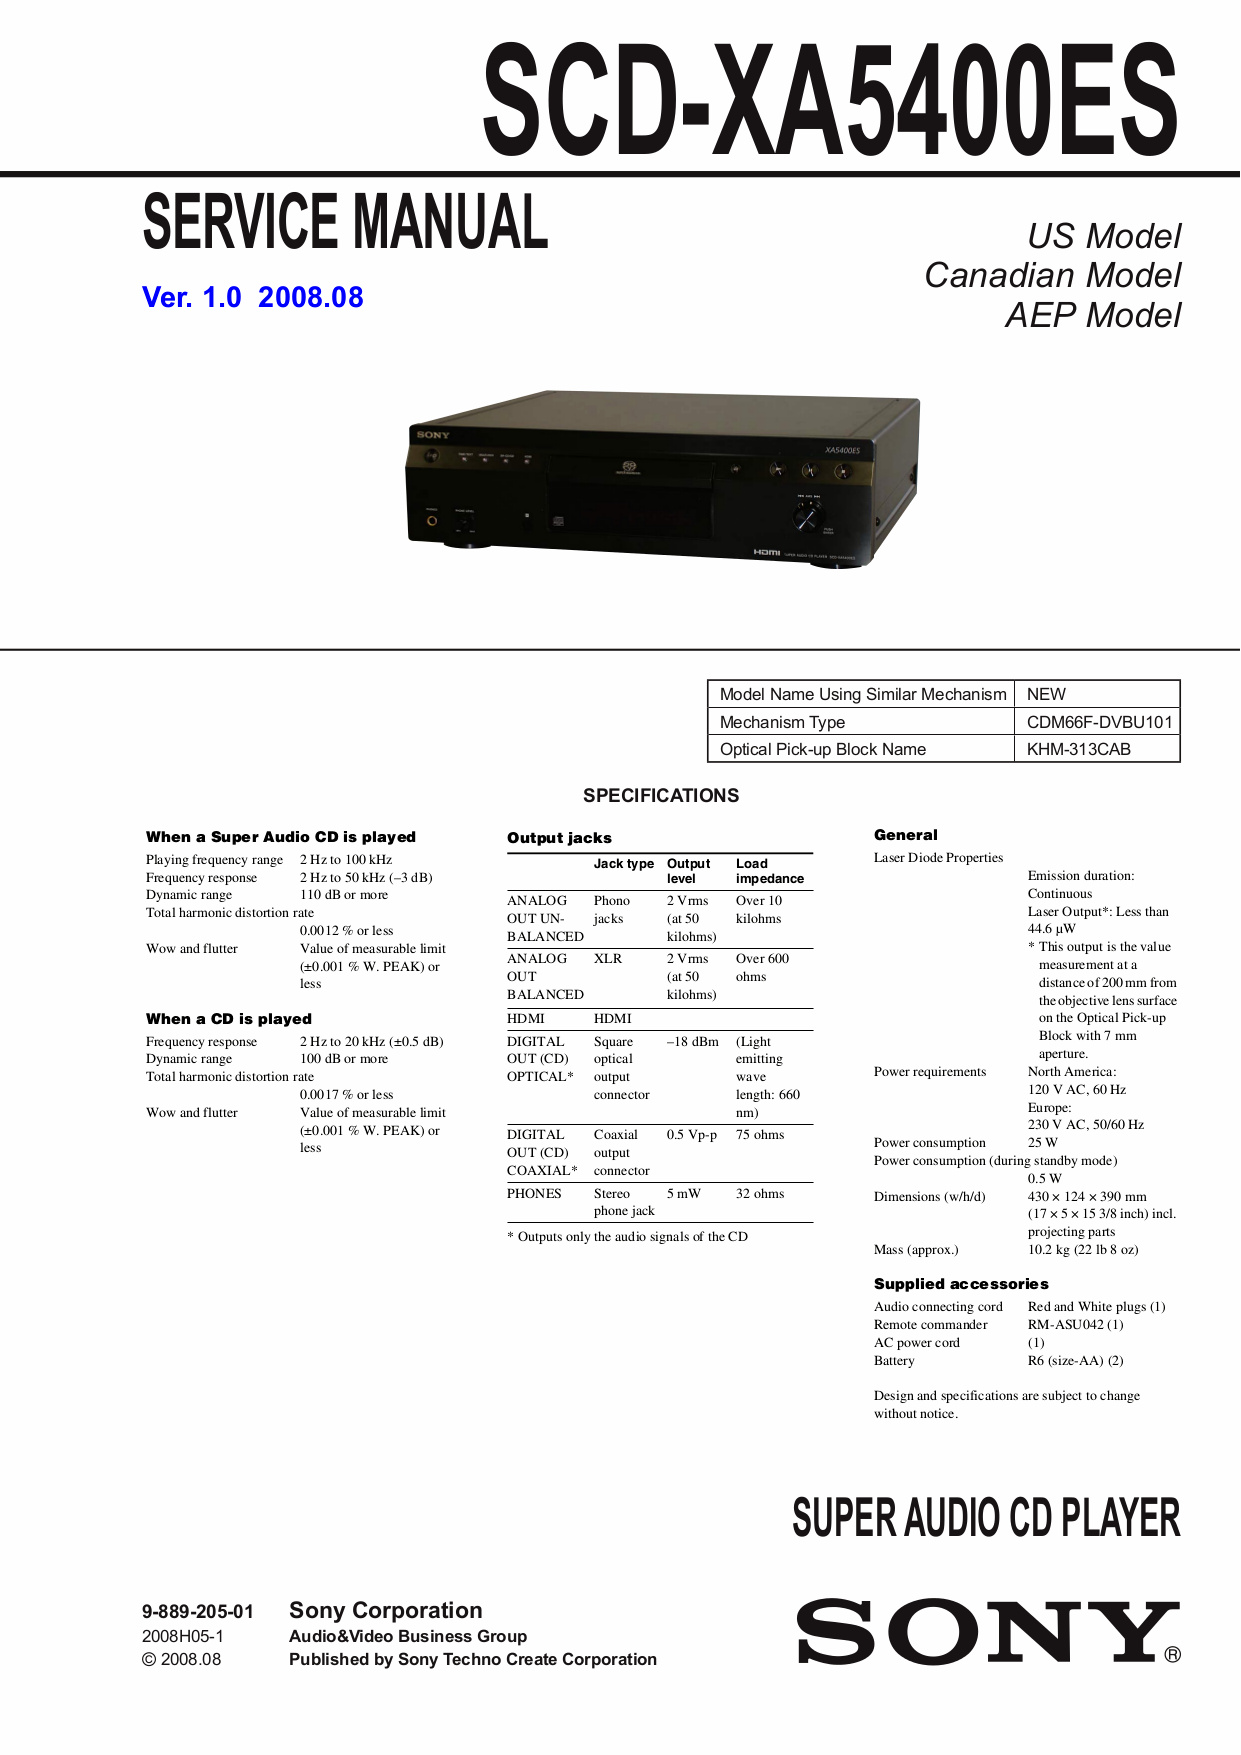 Sony SCD-XA 5400 ES-Daten.jpg